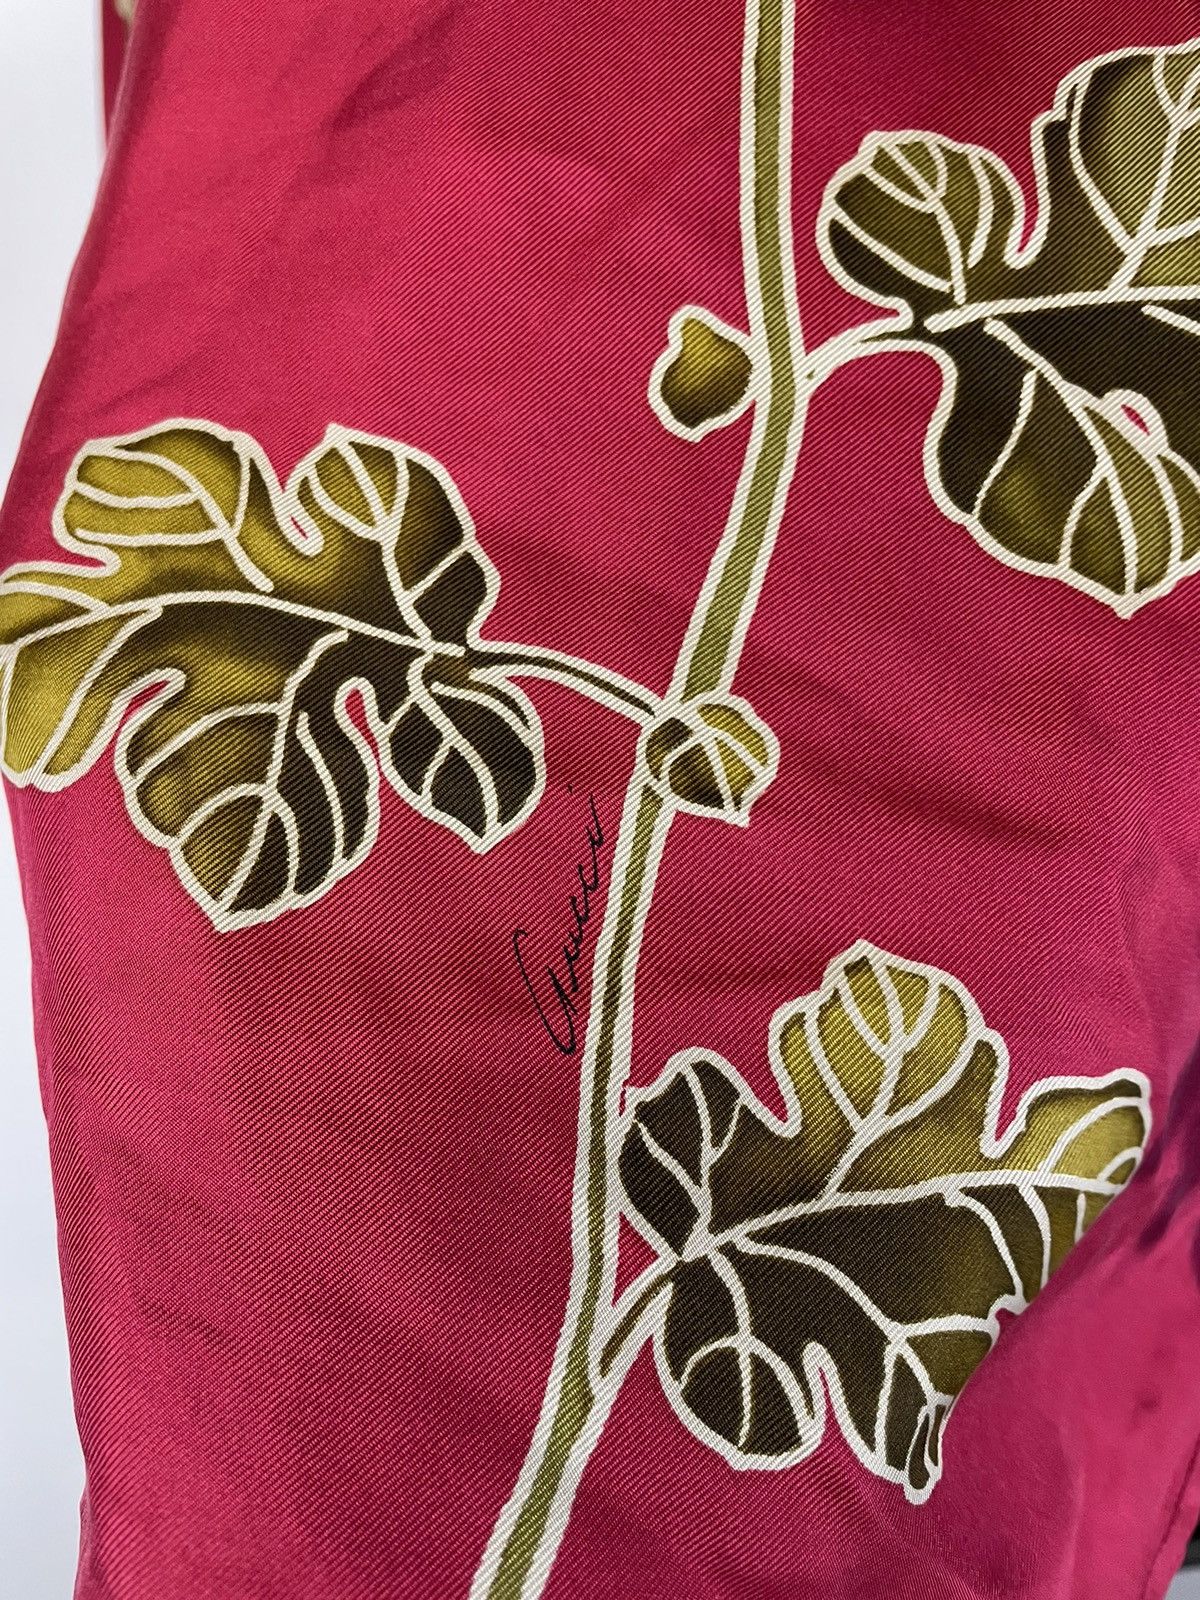 Gucci SS2001 Tom Ford Chrysanthemum floral Print Silk Shirt rare Size US M / EU 48-50 / 2 - 7 Thumbnail